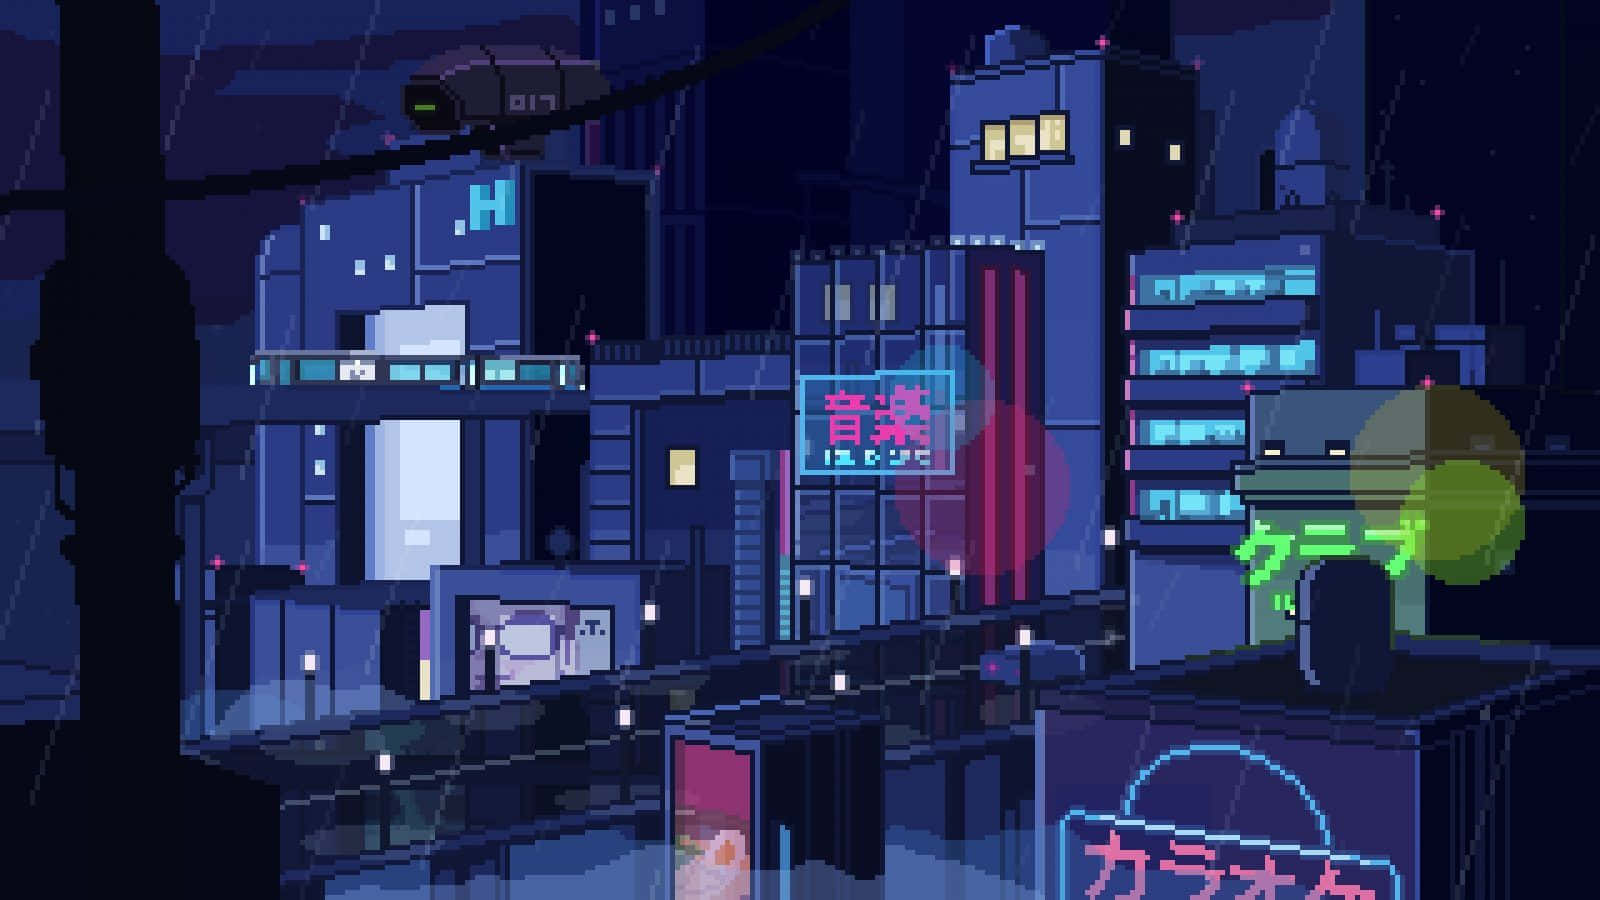 Explore The Neon-lit Cyberpunk World With Pixel Art